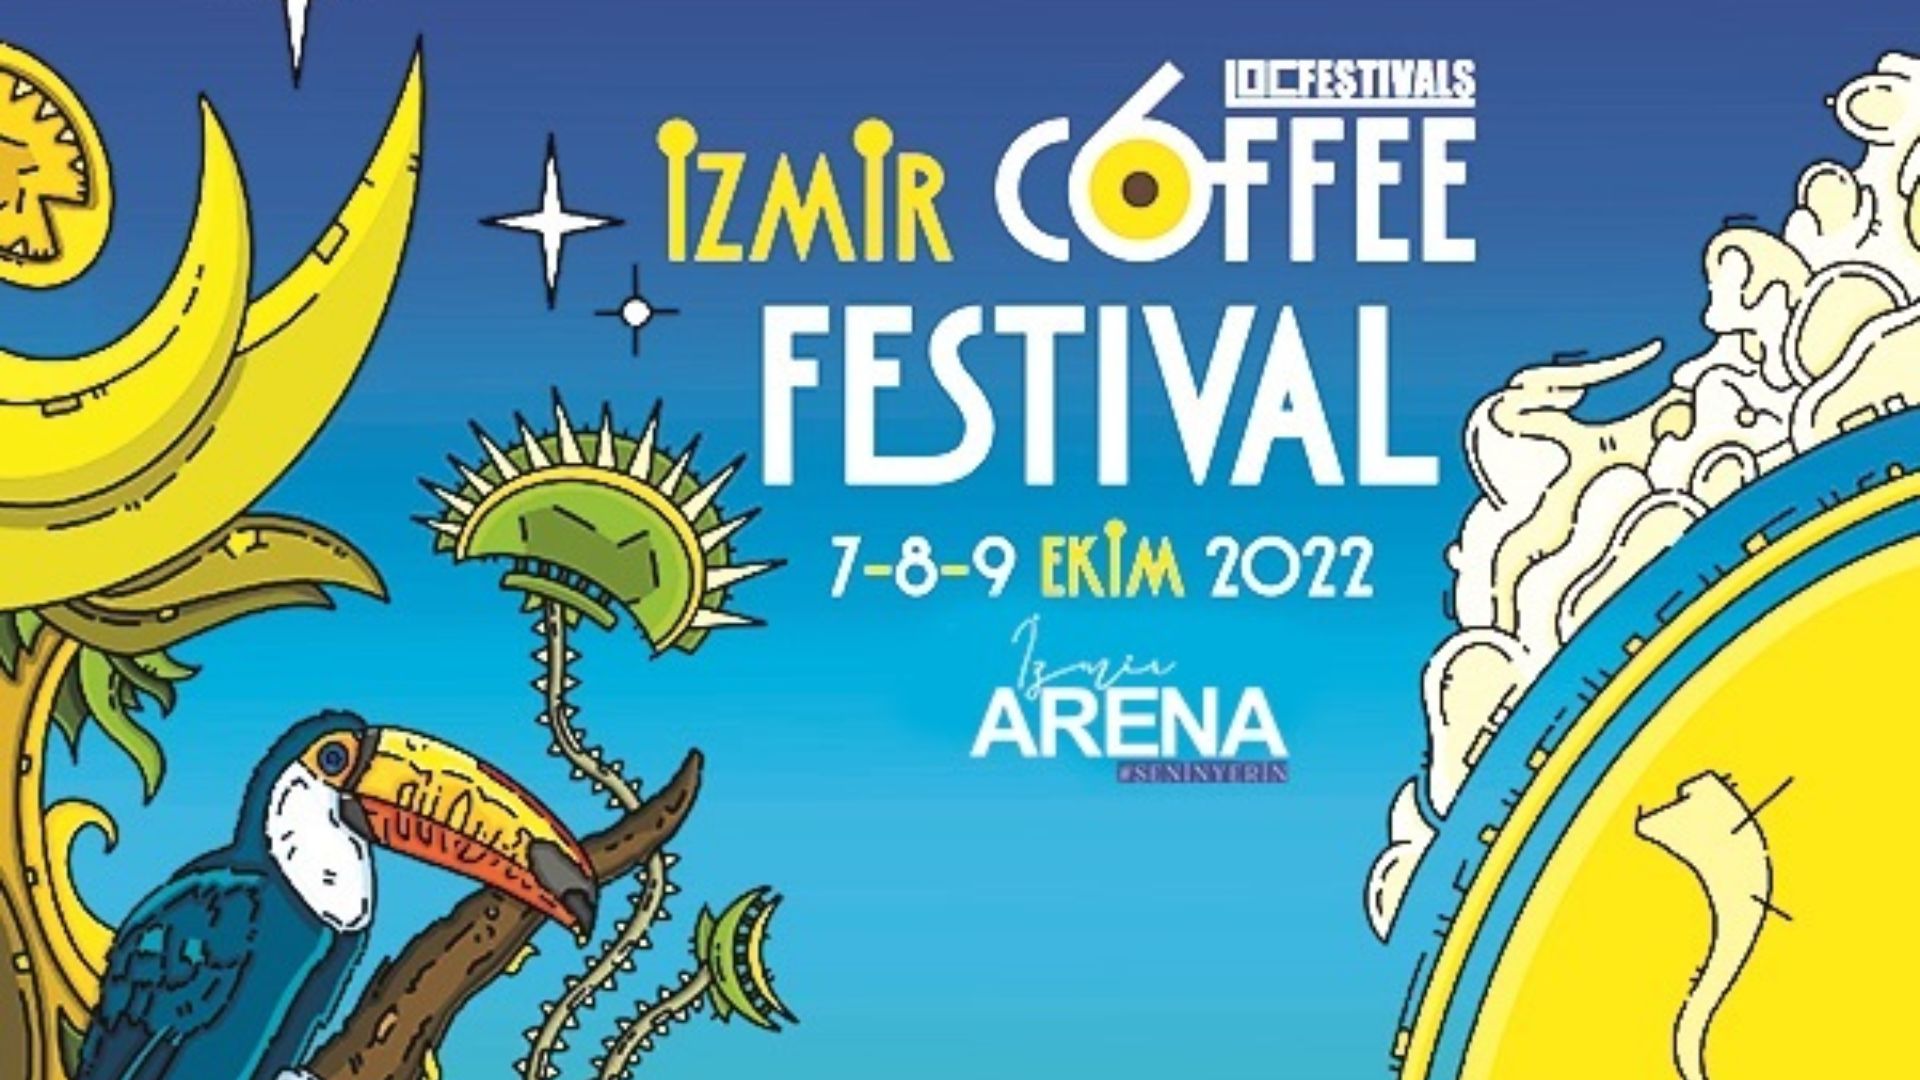 izmir coffee festival 2022 festival